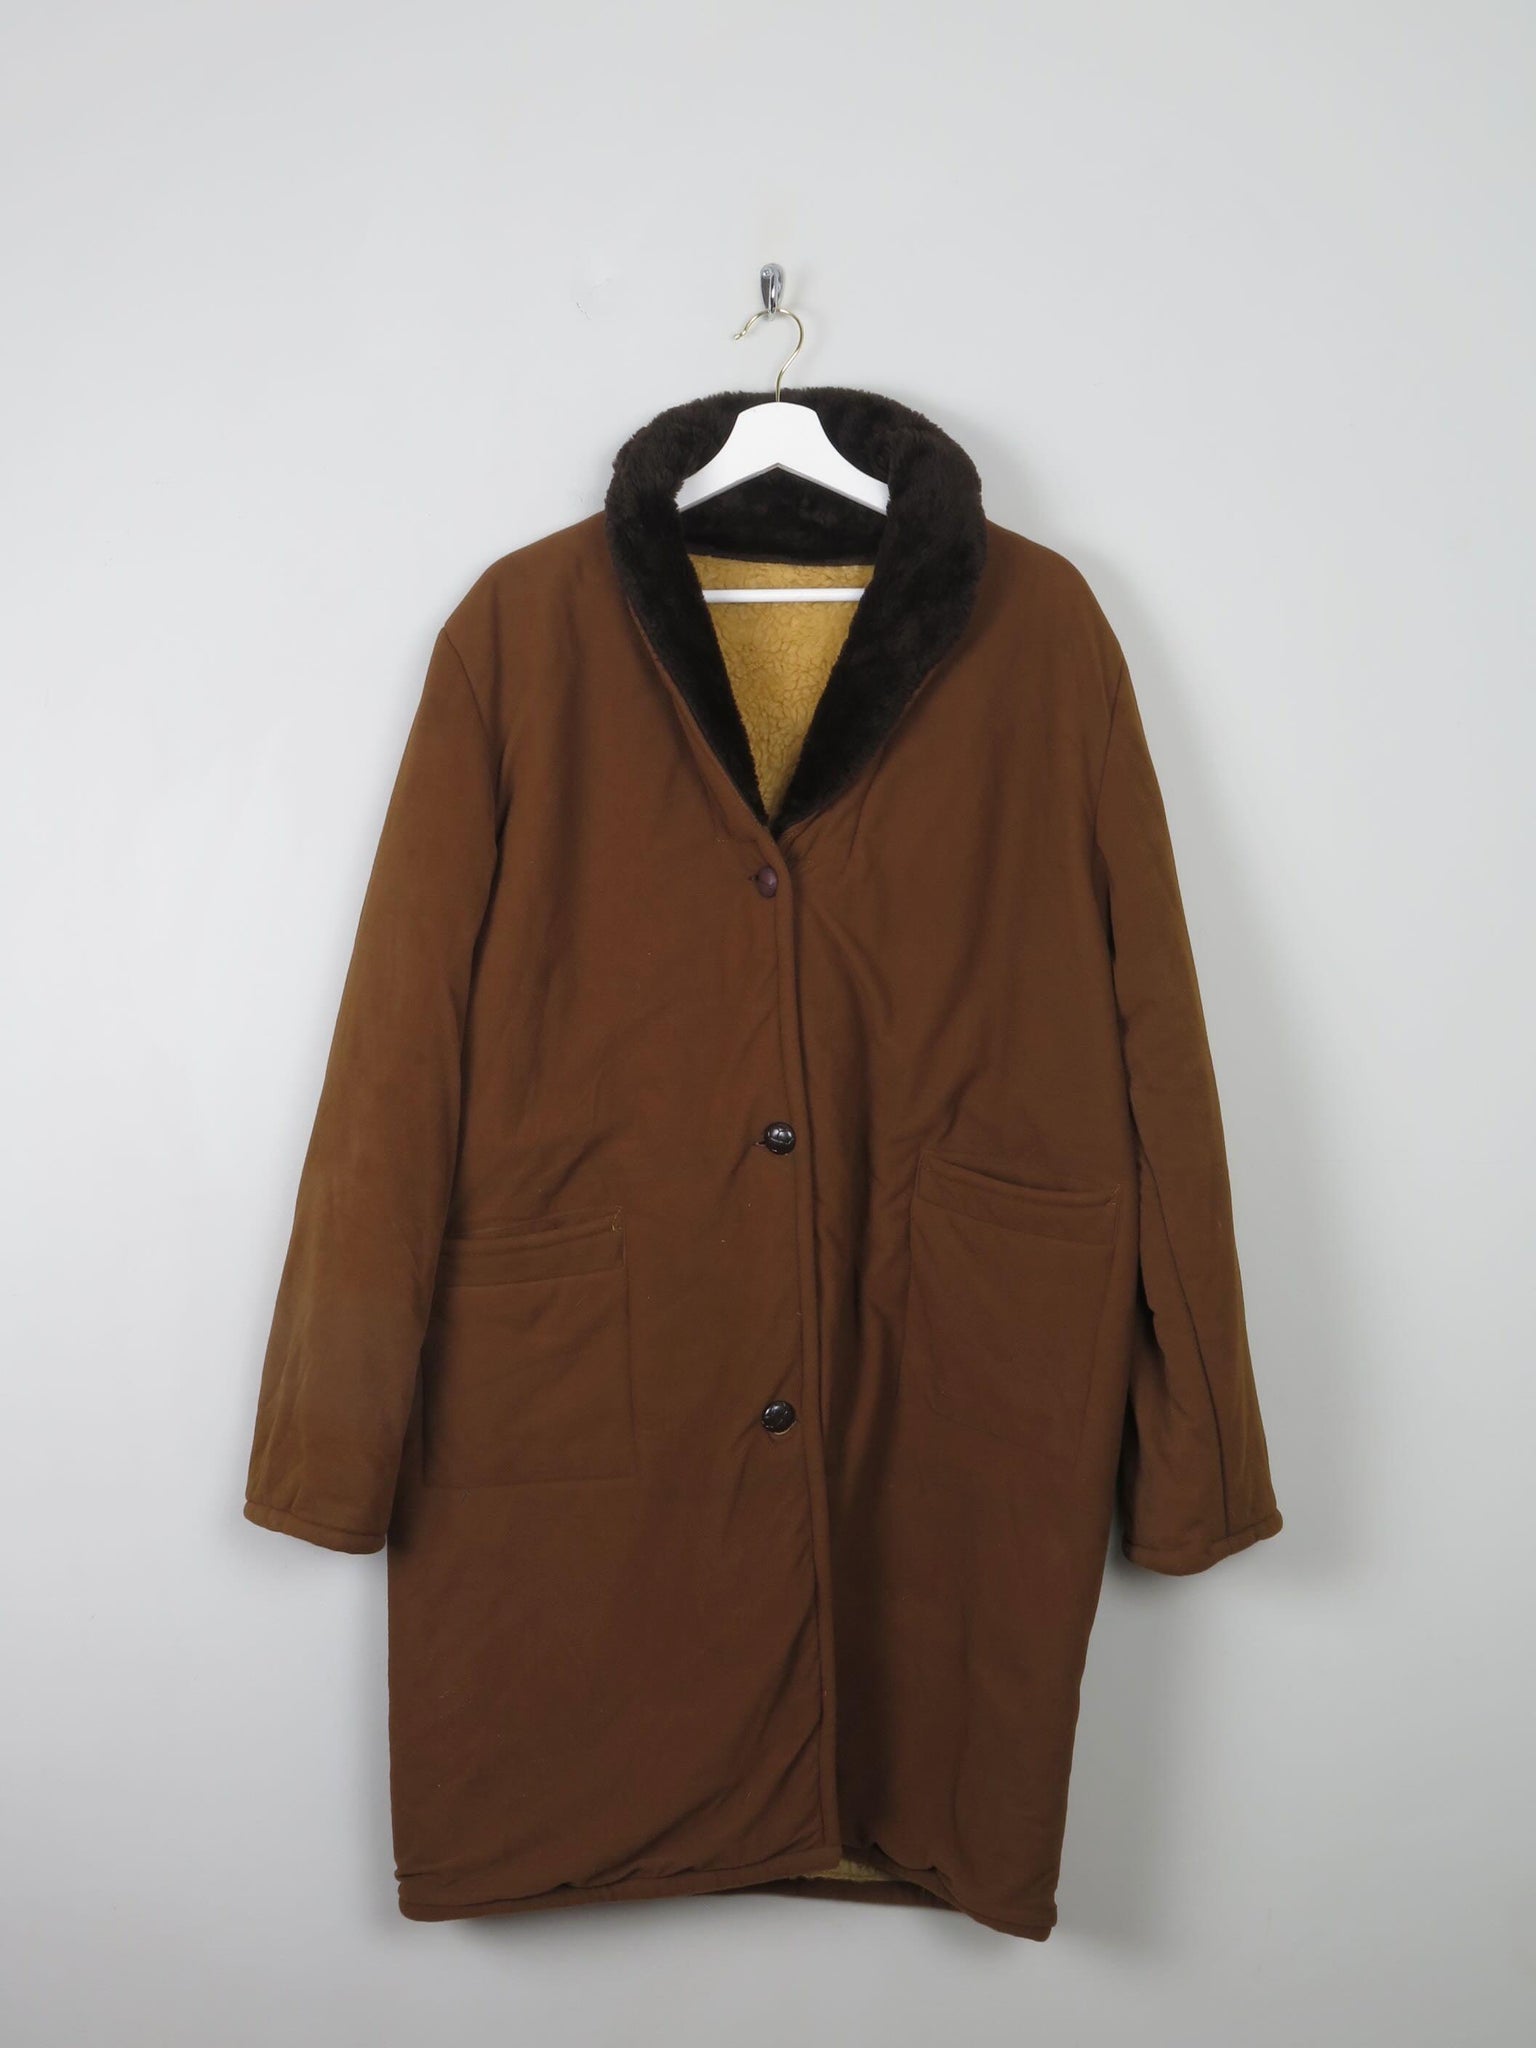 Women's 1960s Faux Sheepskin Style Coat M/L - The Harlequin